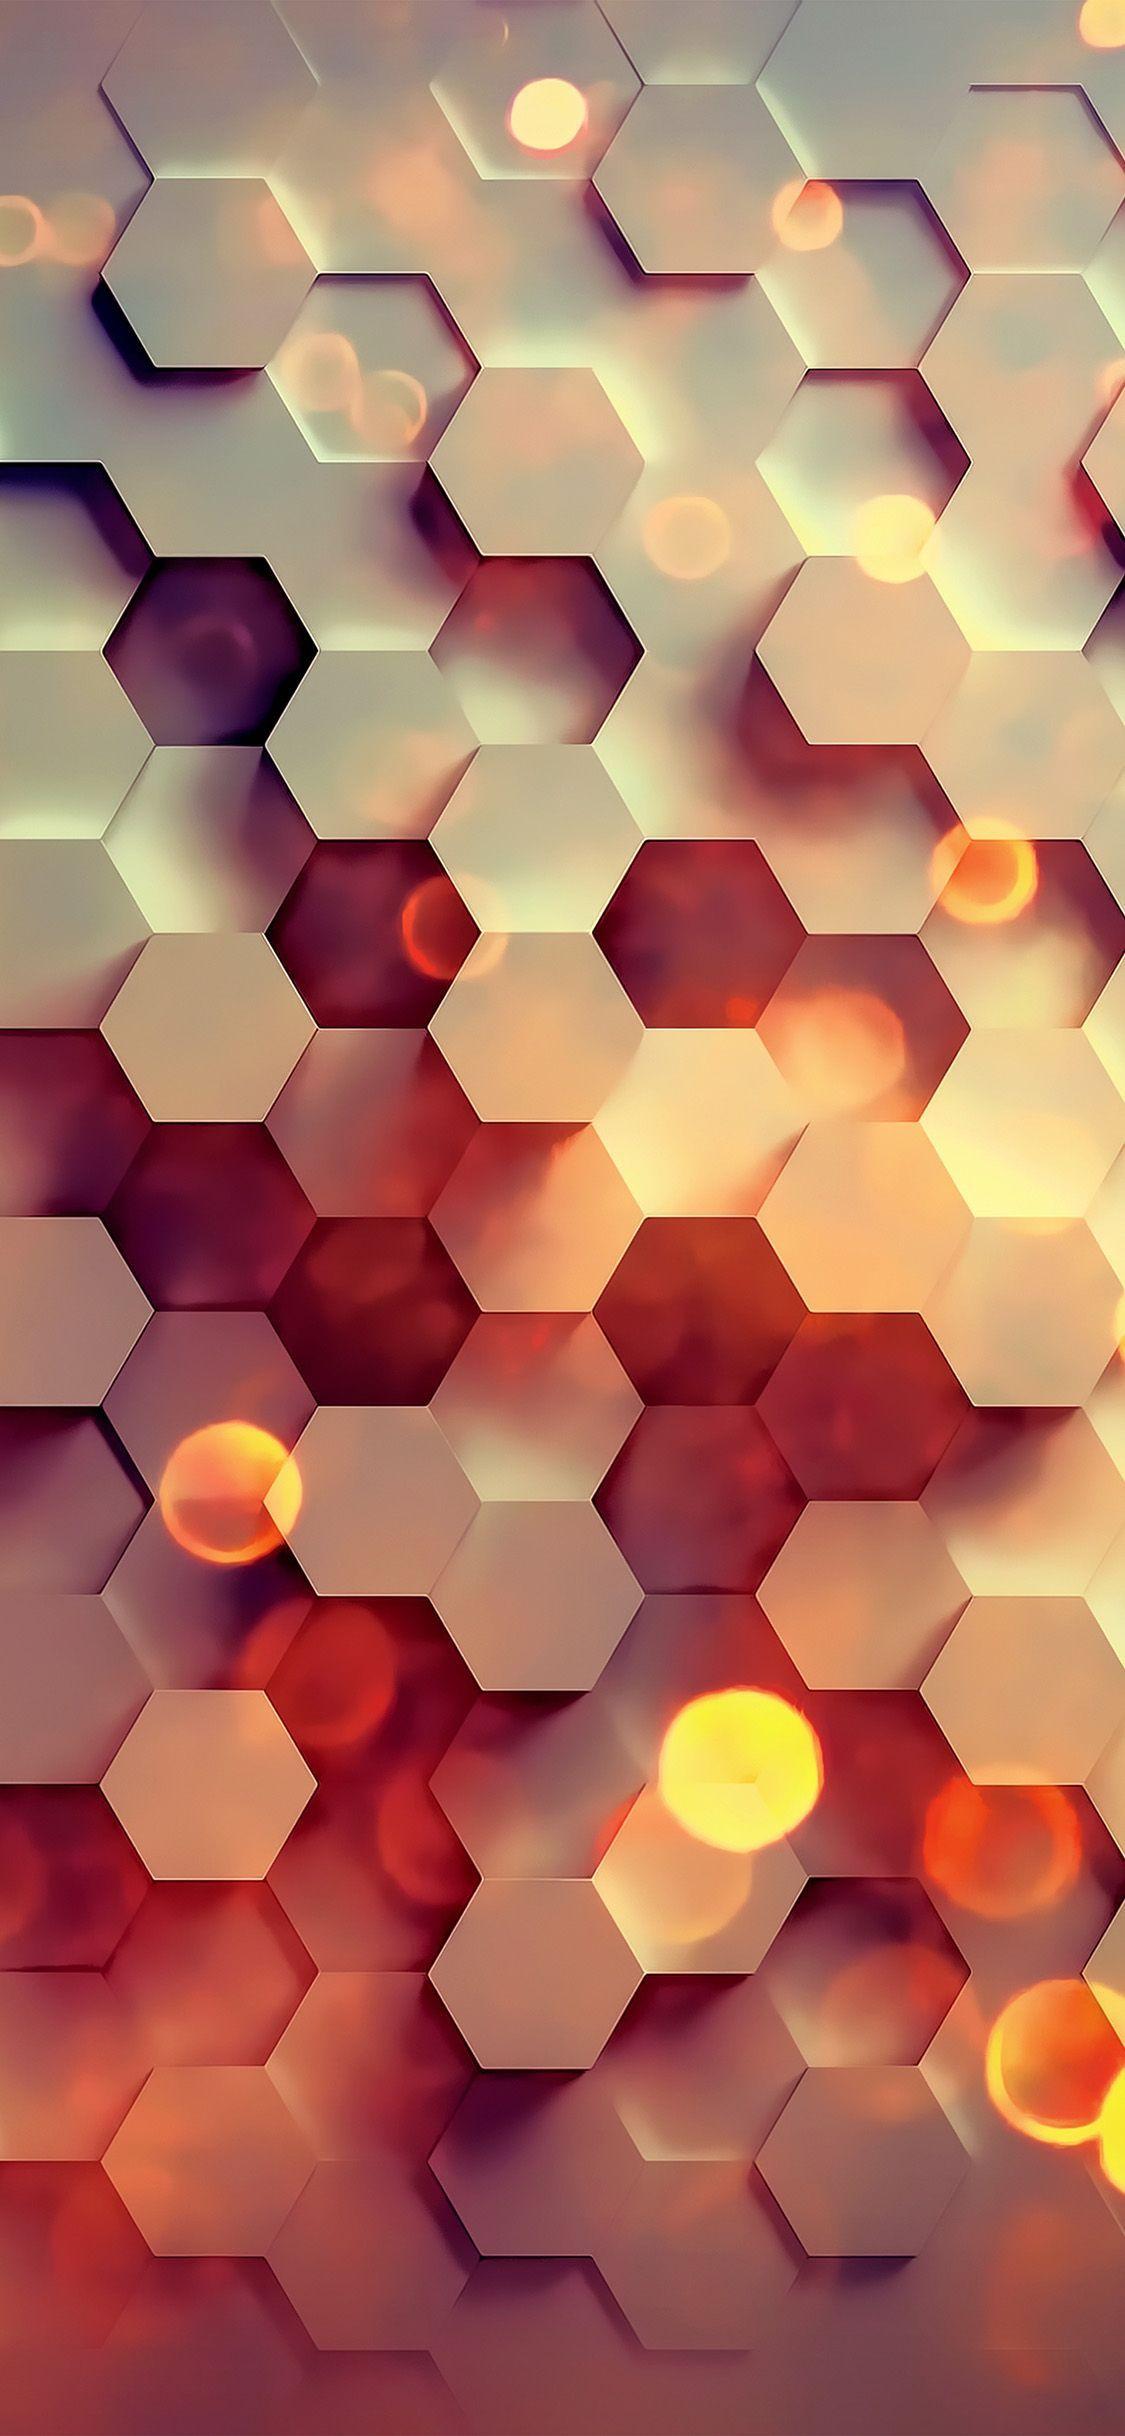 Download Hd Wallpaper, Background, Hexagon. Royalty-Free Stock Illustration  Image - Pixabay